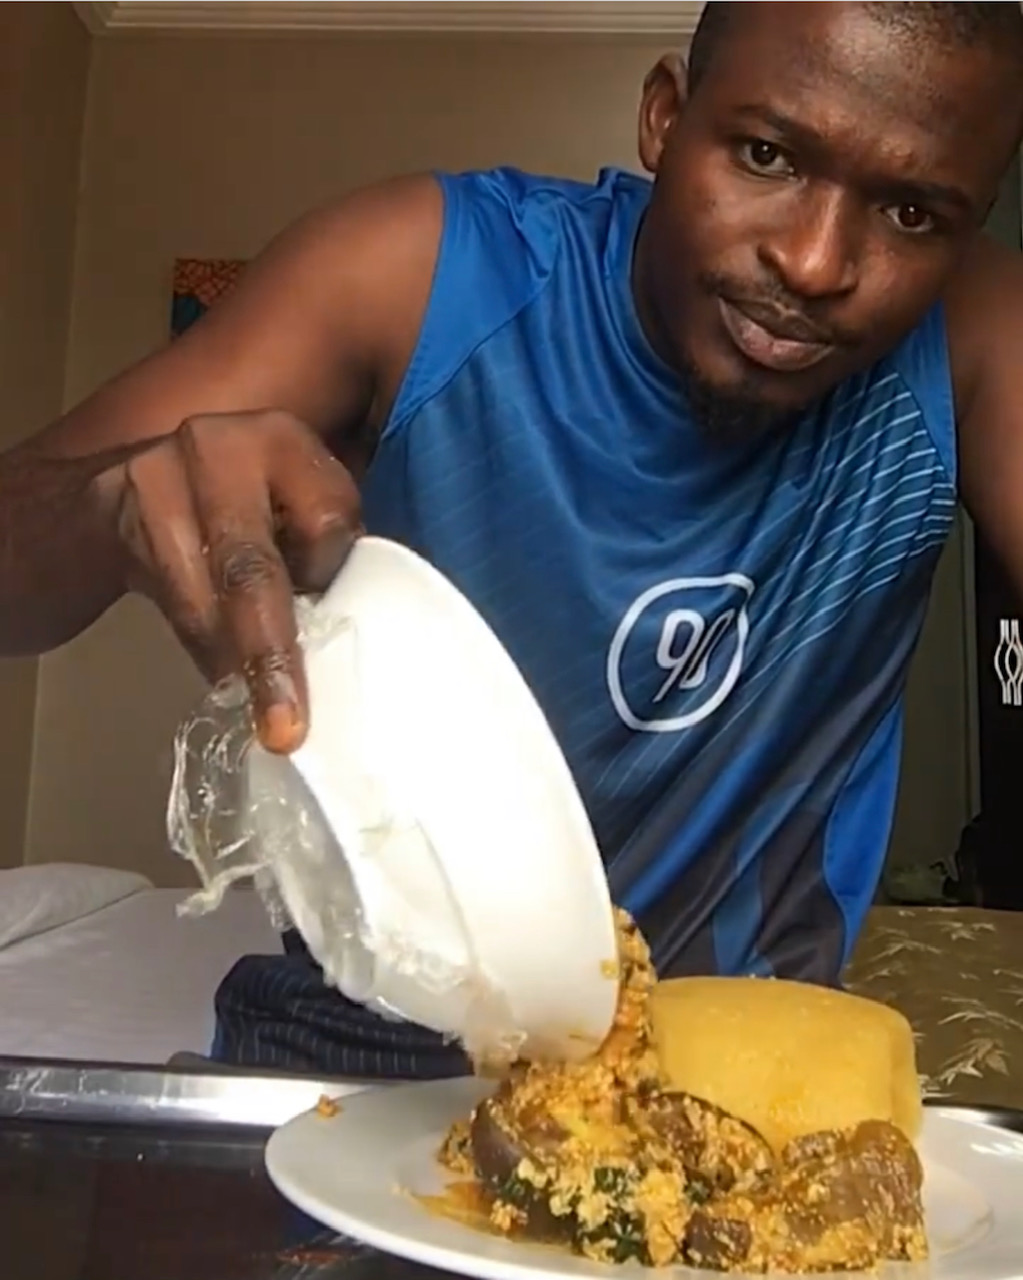 Nigerian Eba (How To Make Eba) - My Active Kitchen, Recipe